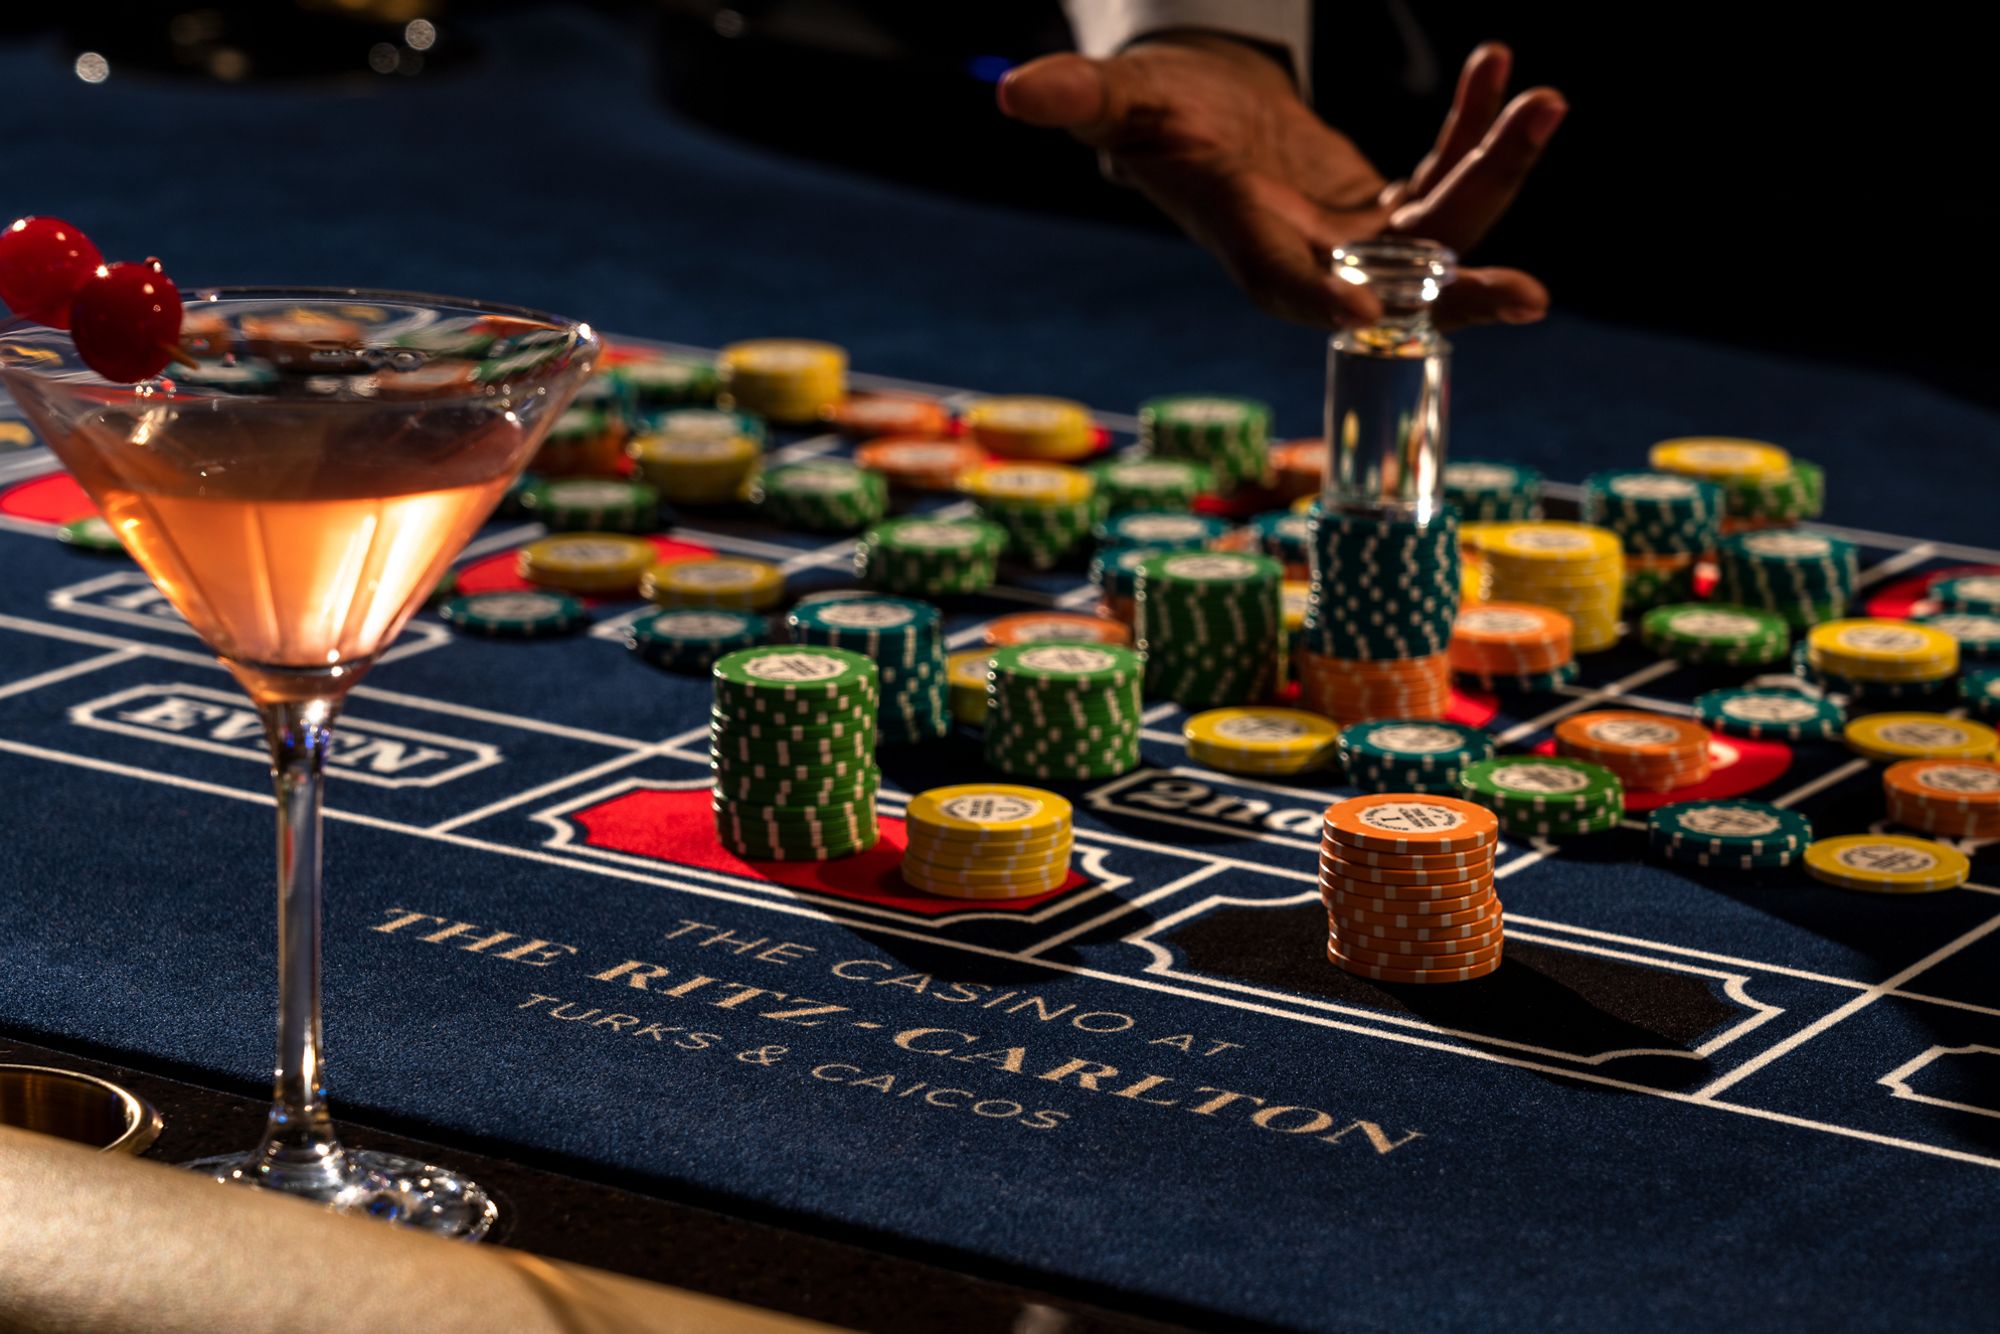 The Casino at The Ritz-Carlton, Turks & Caicos